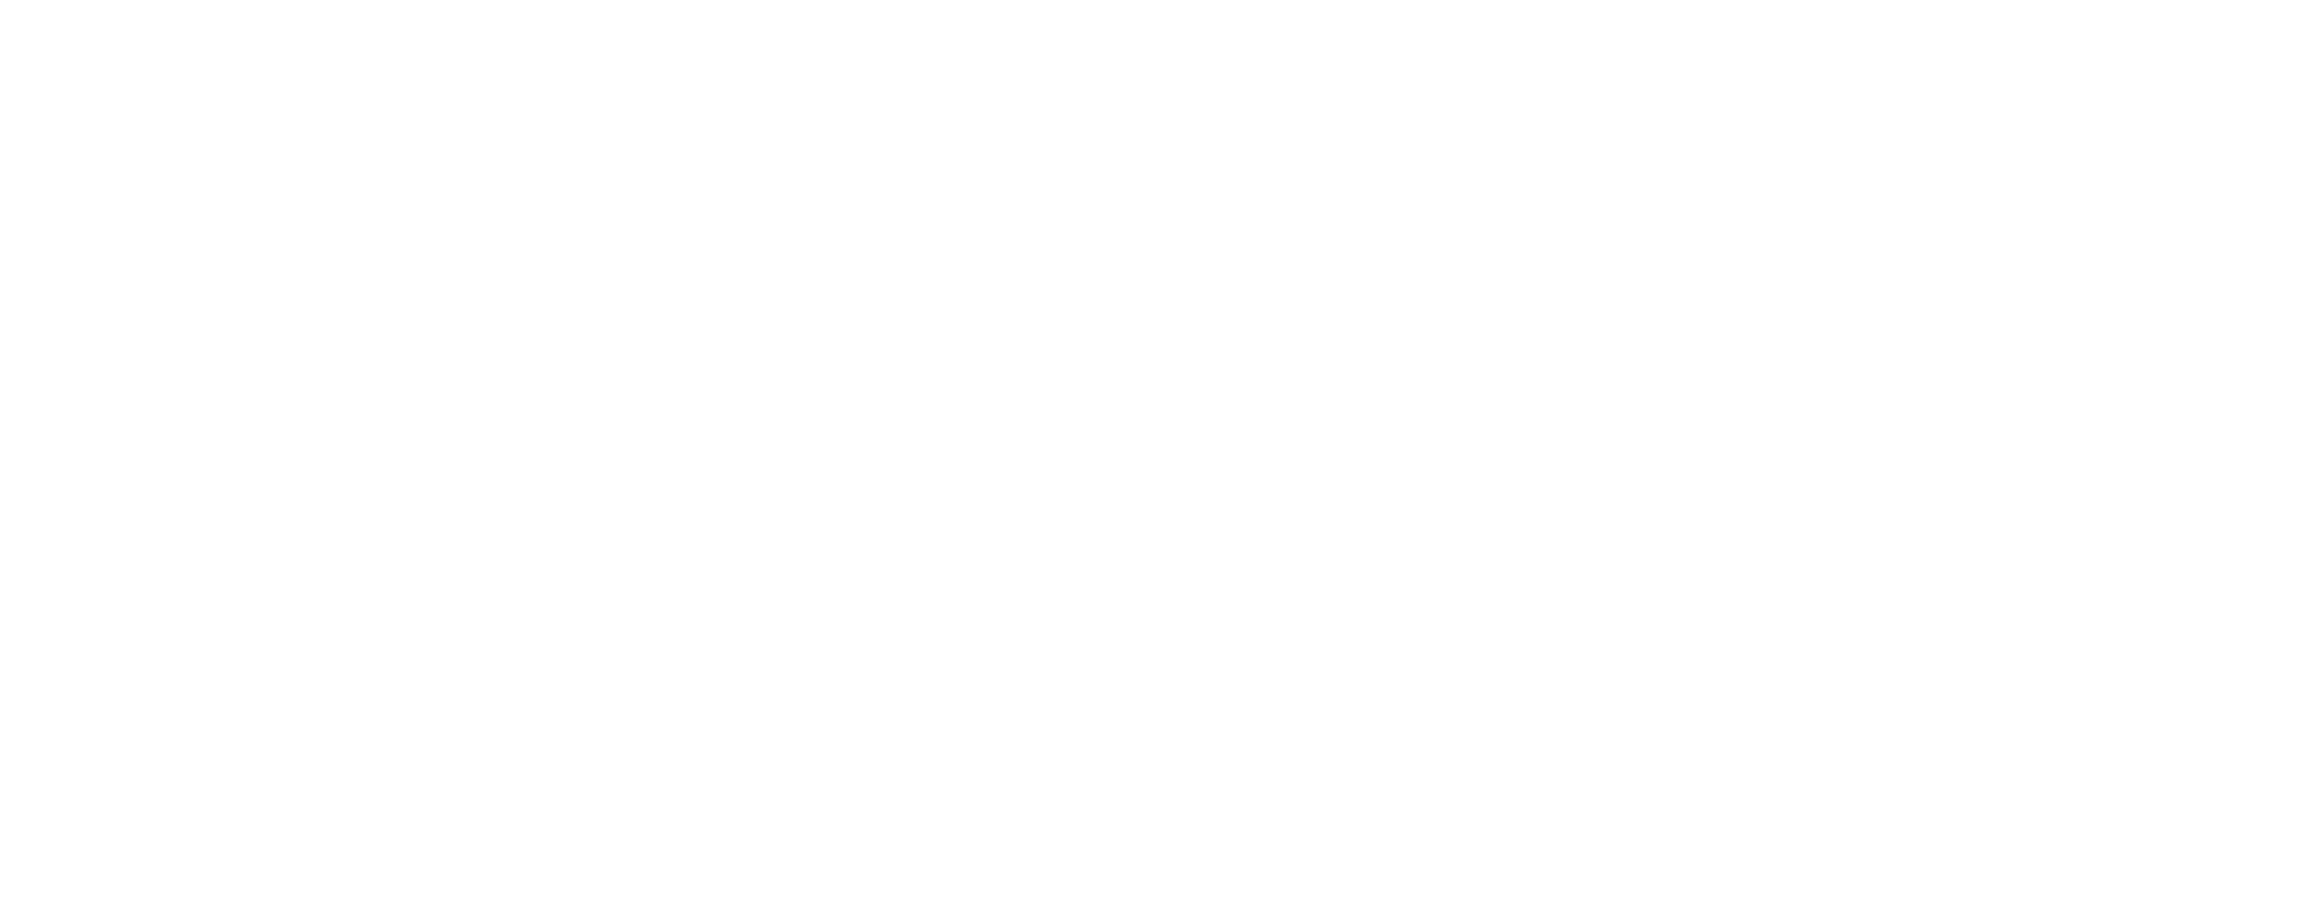 King of Kings Logo - King of Kings Lutheran Church, Glenpool, OK